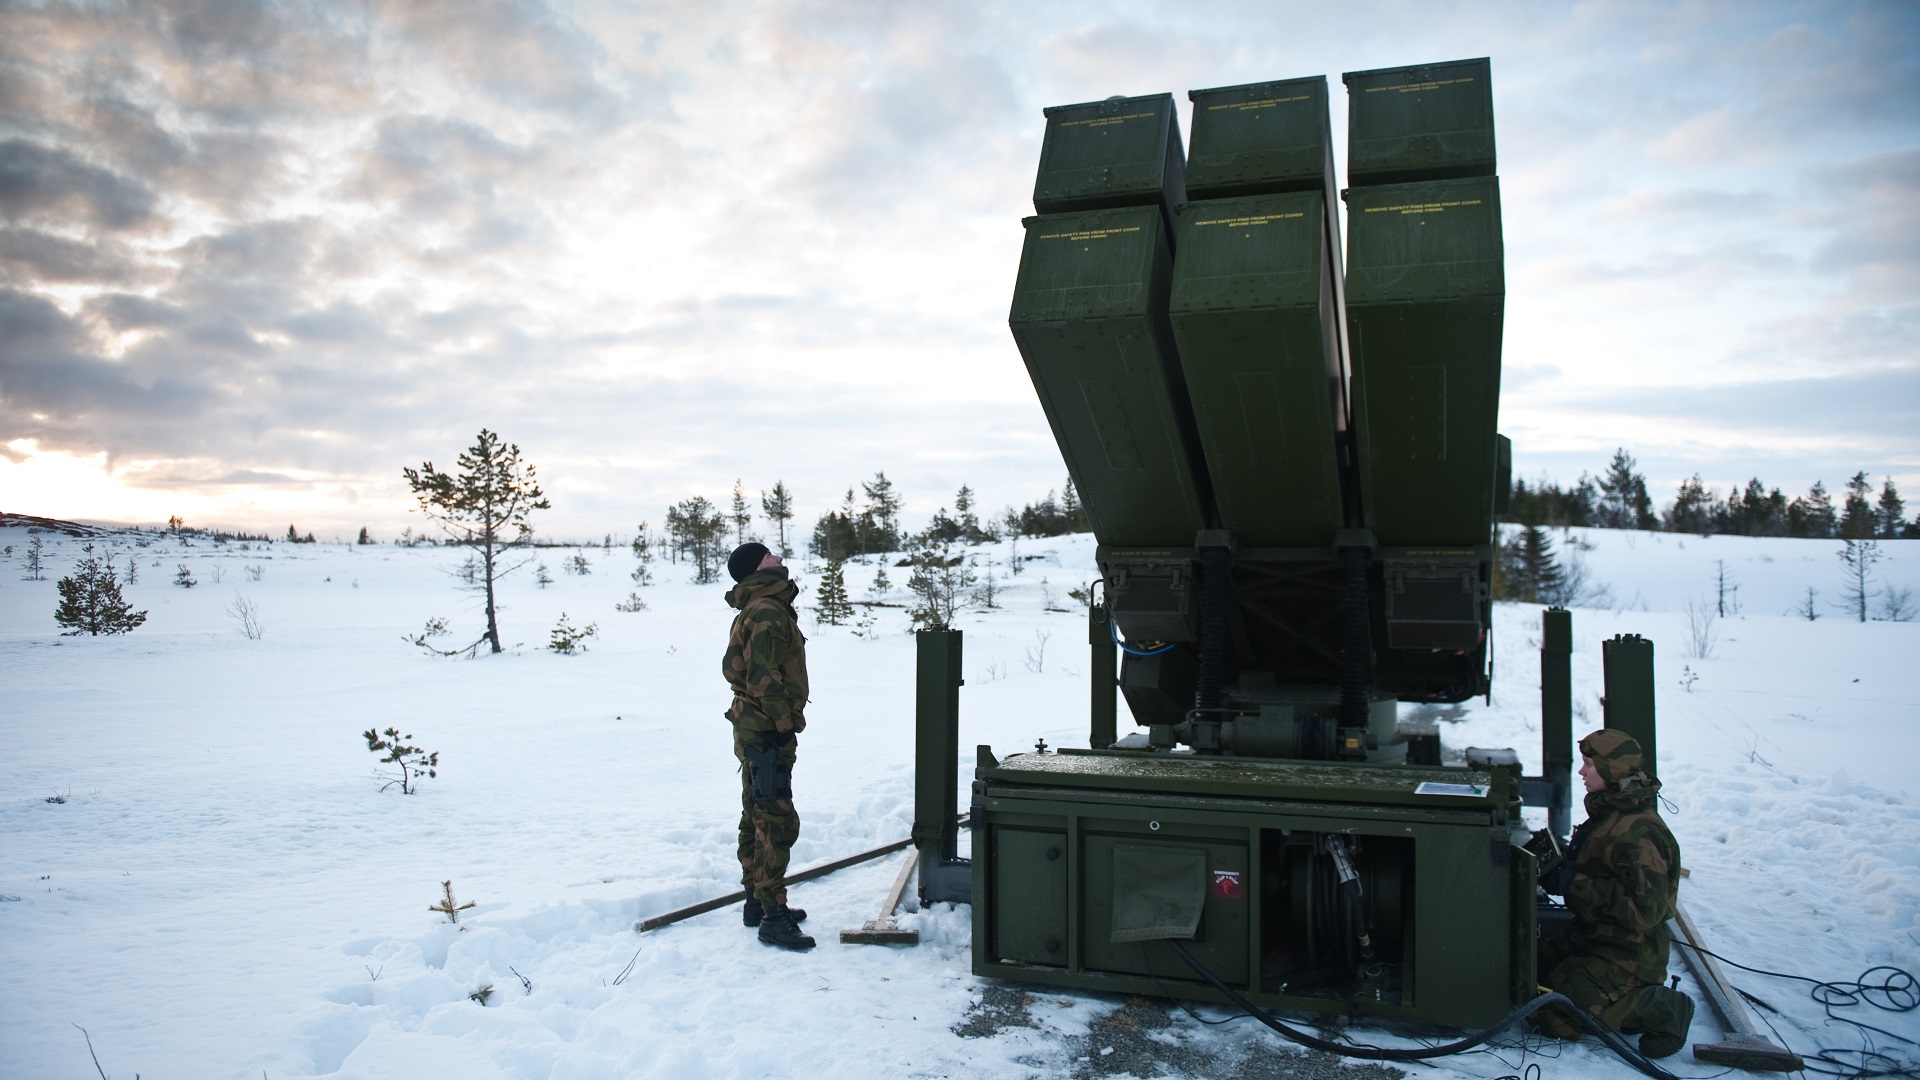 Sistema de defensa aérea NASAMS, desplegado en Noruega (Wikimedia Commons)